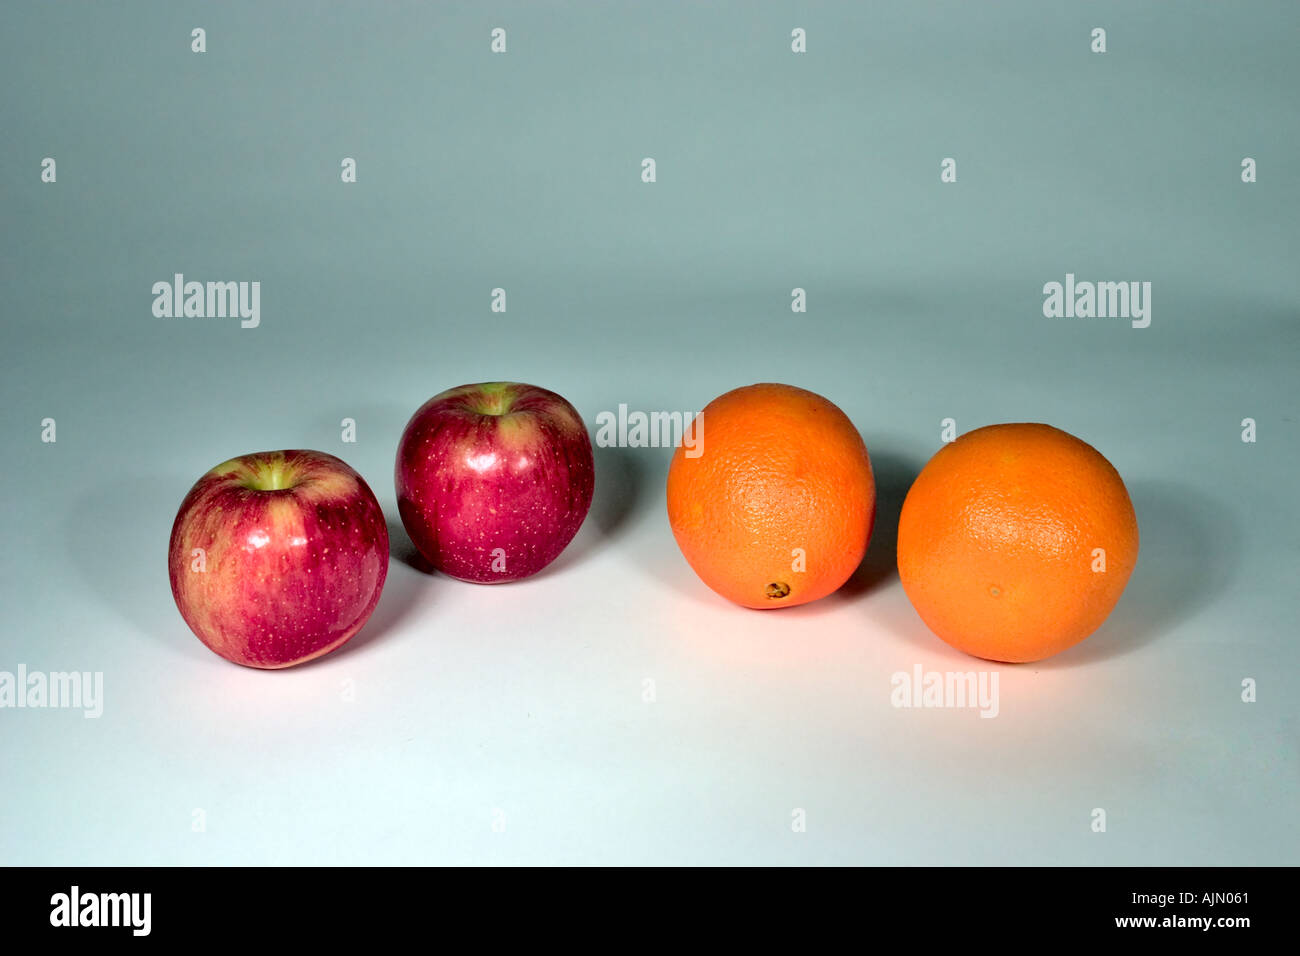 https://c8.alamy.com/comp/AJN061/comparing-apples-to-oranges-AJN061.jpg